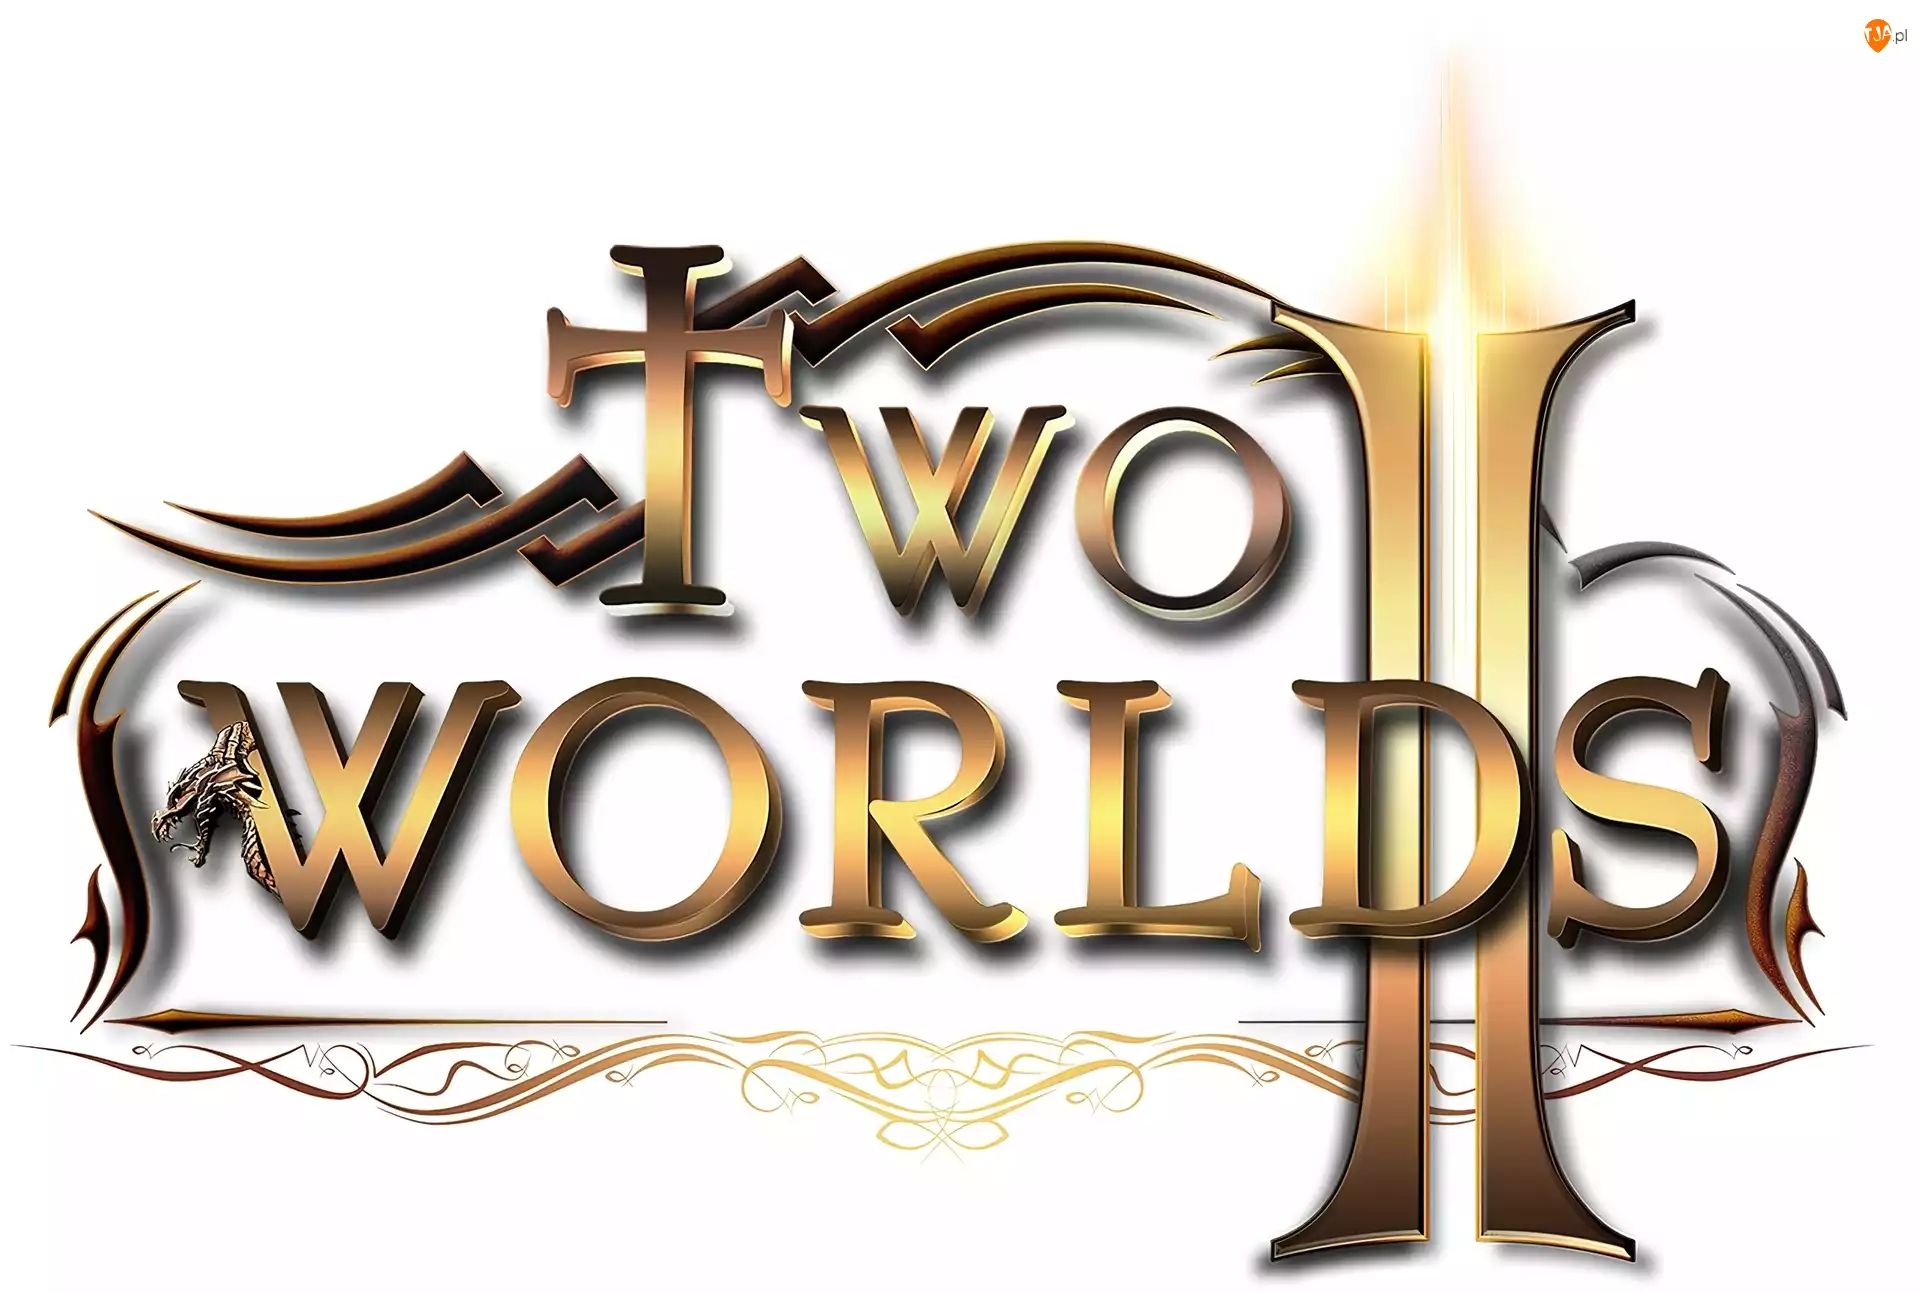 Two Worlds II, Logo, Gry